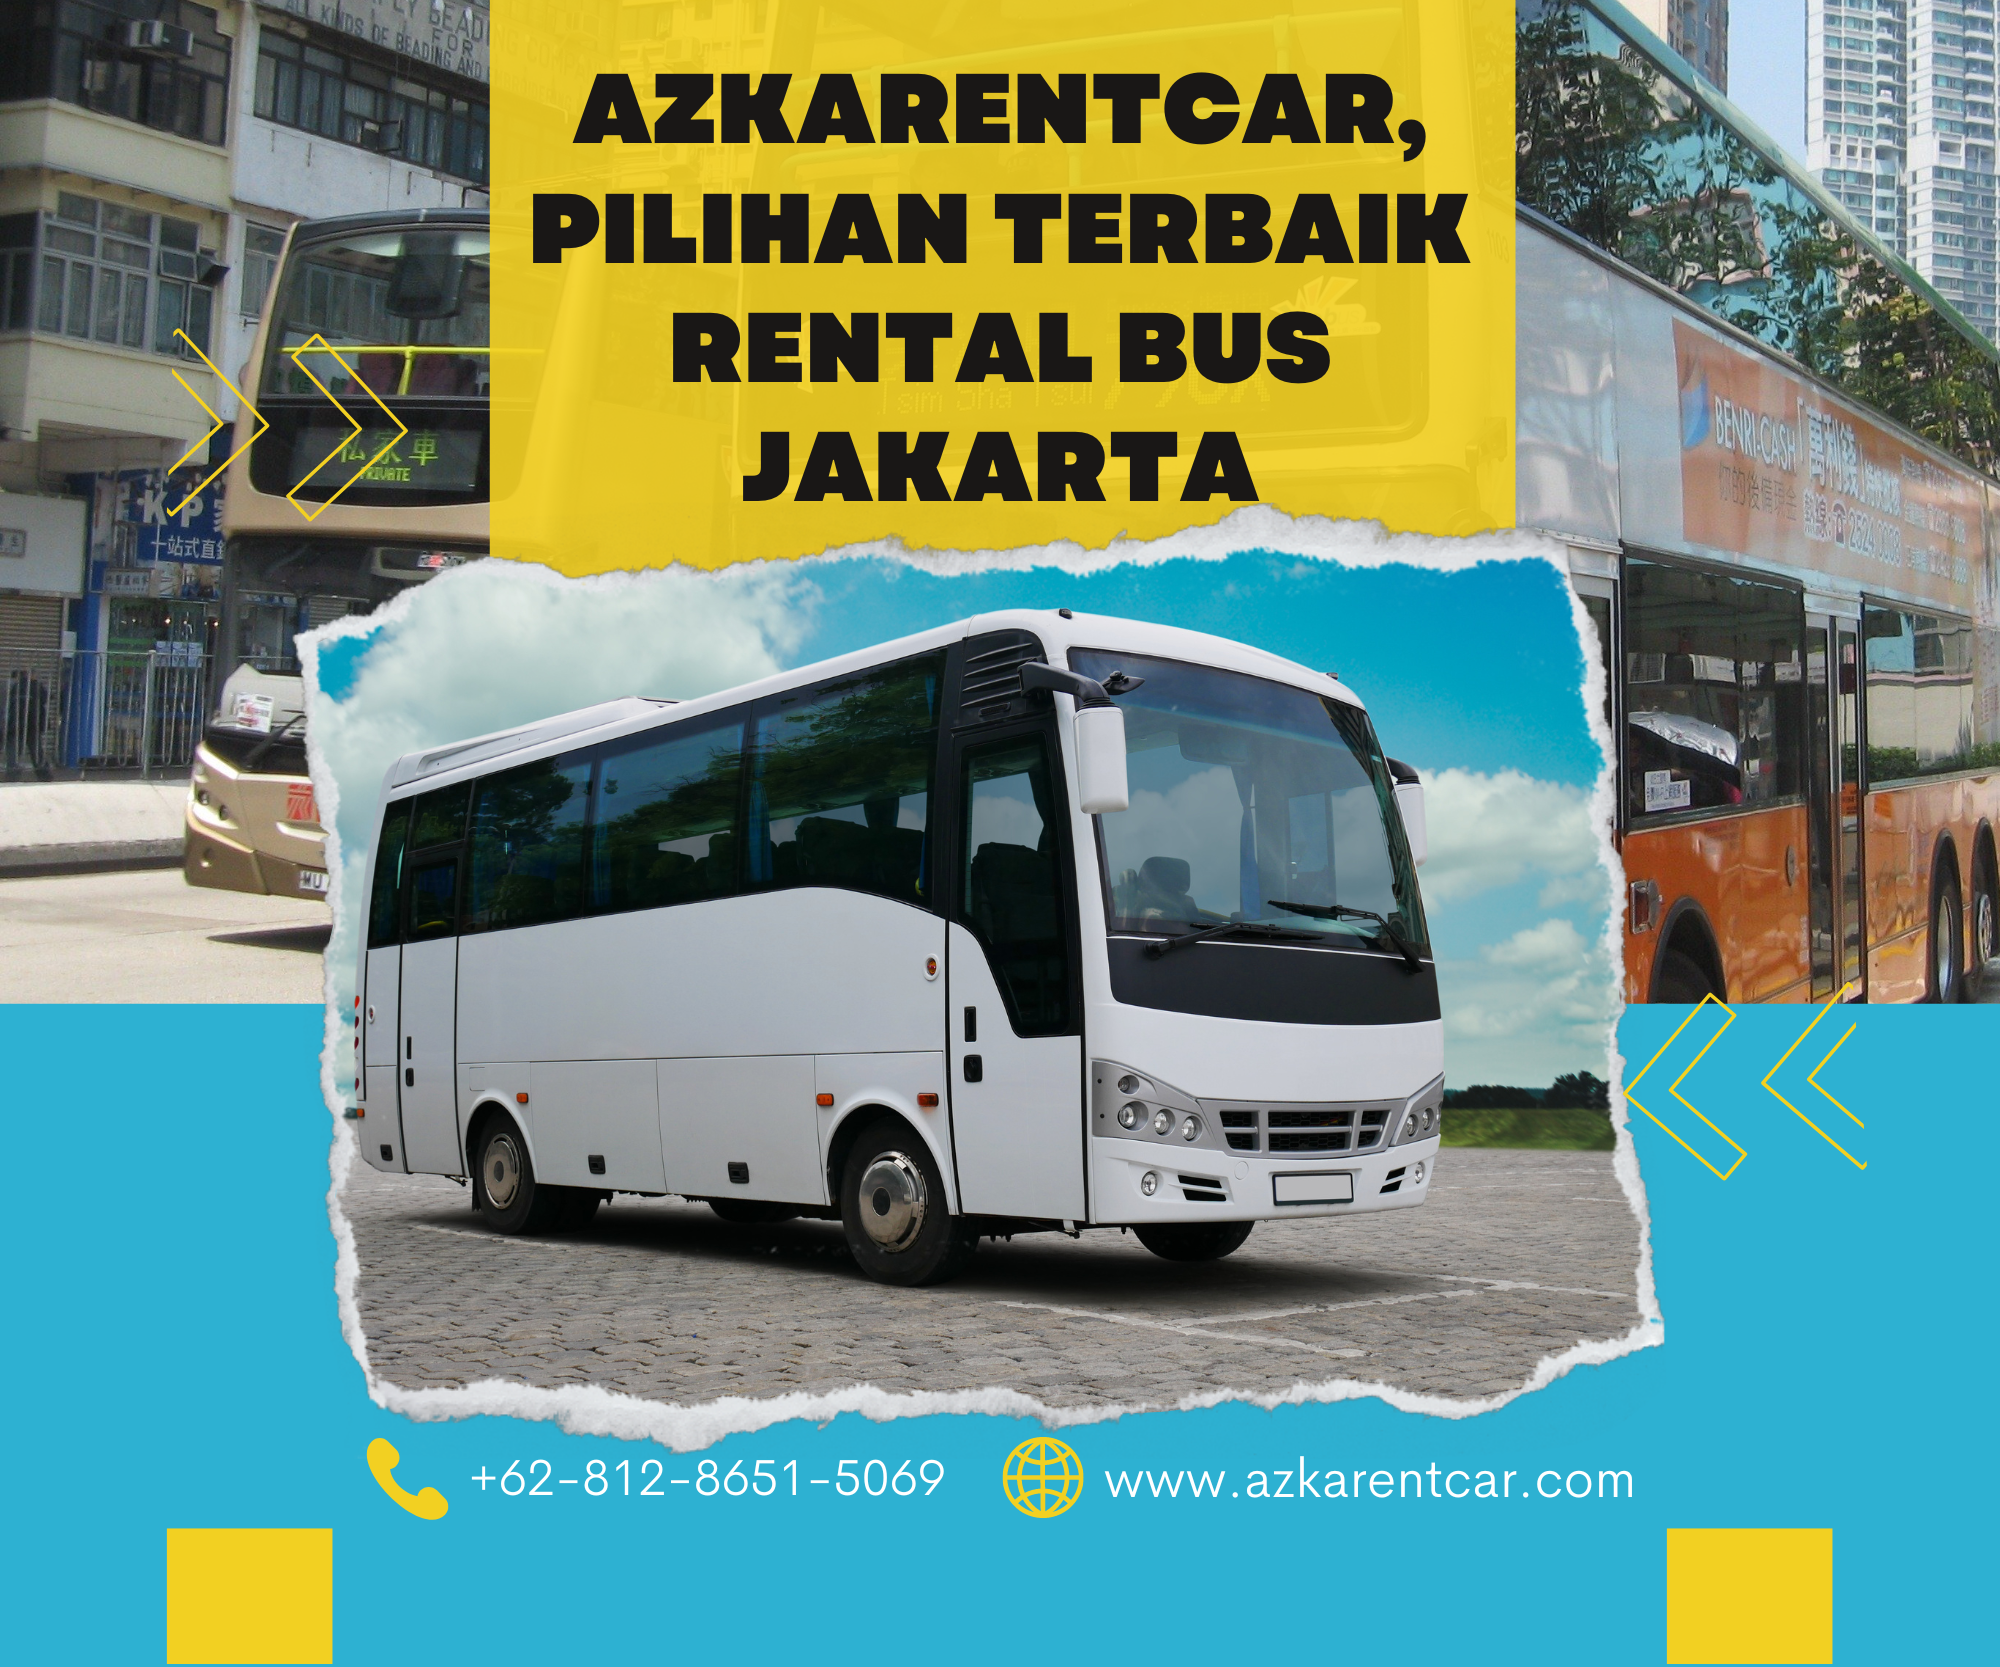 AzkaRentcar Pilihan Terbaik Rental Bus Jakarta